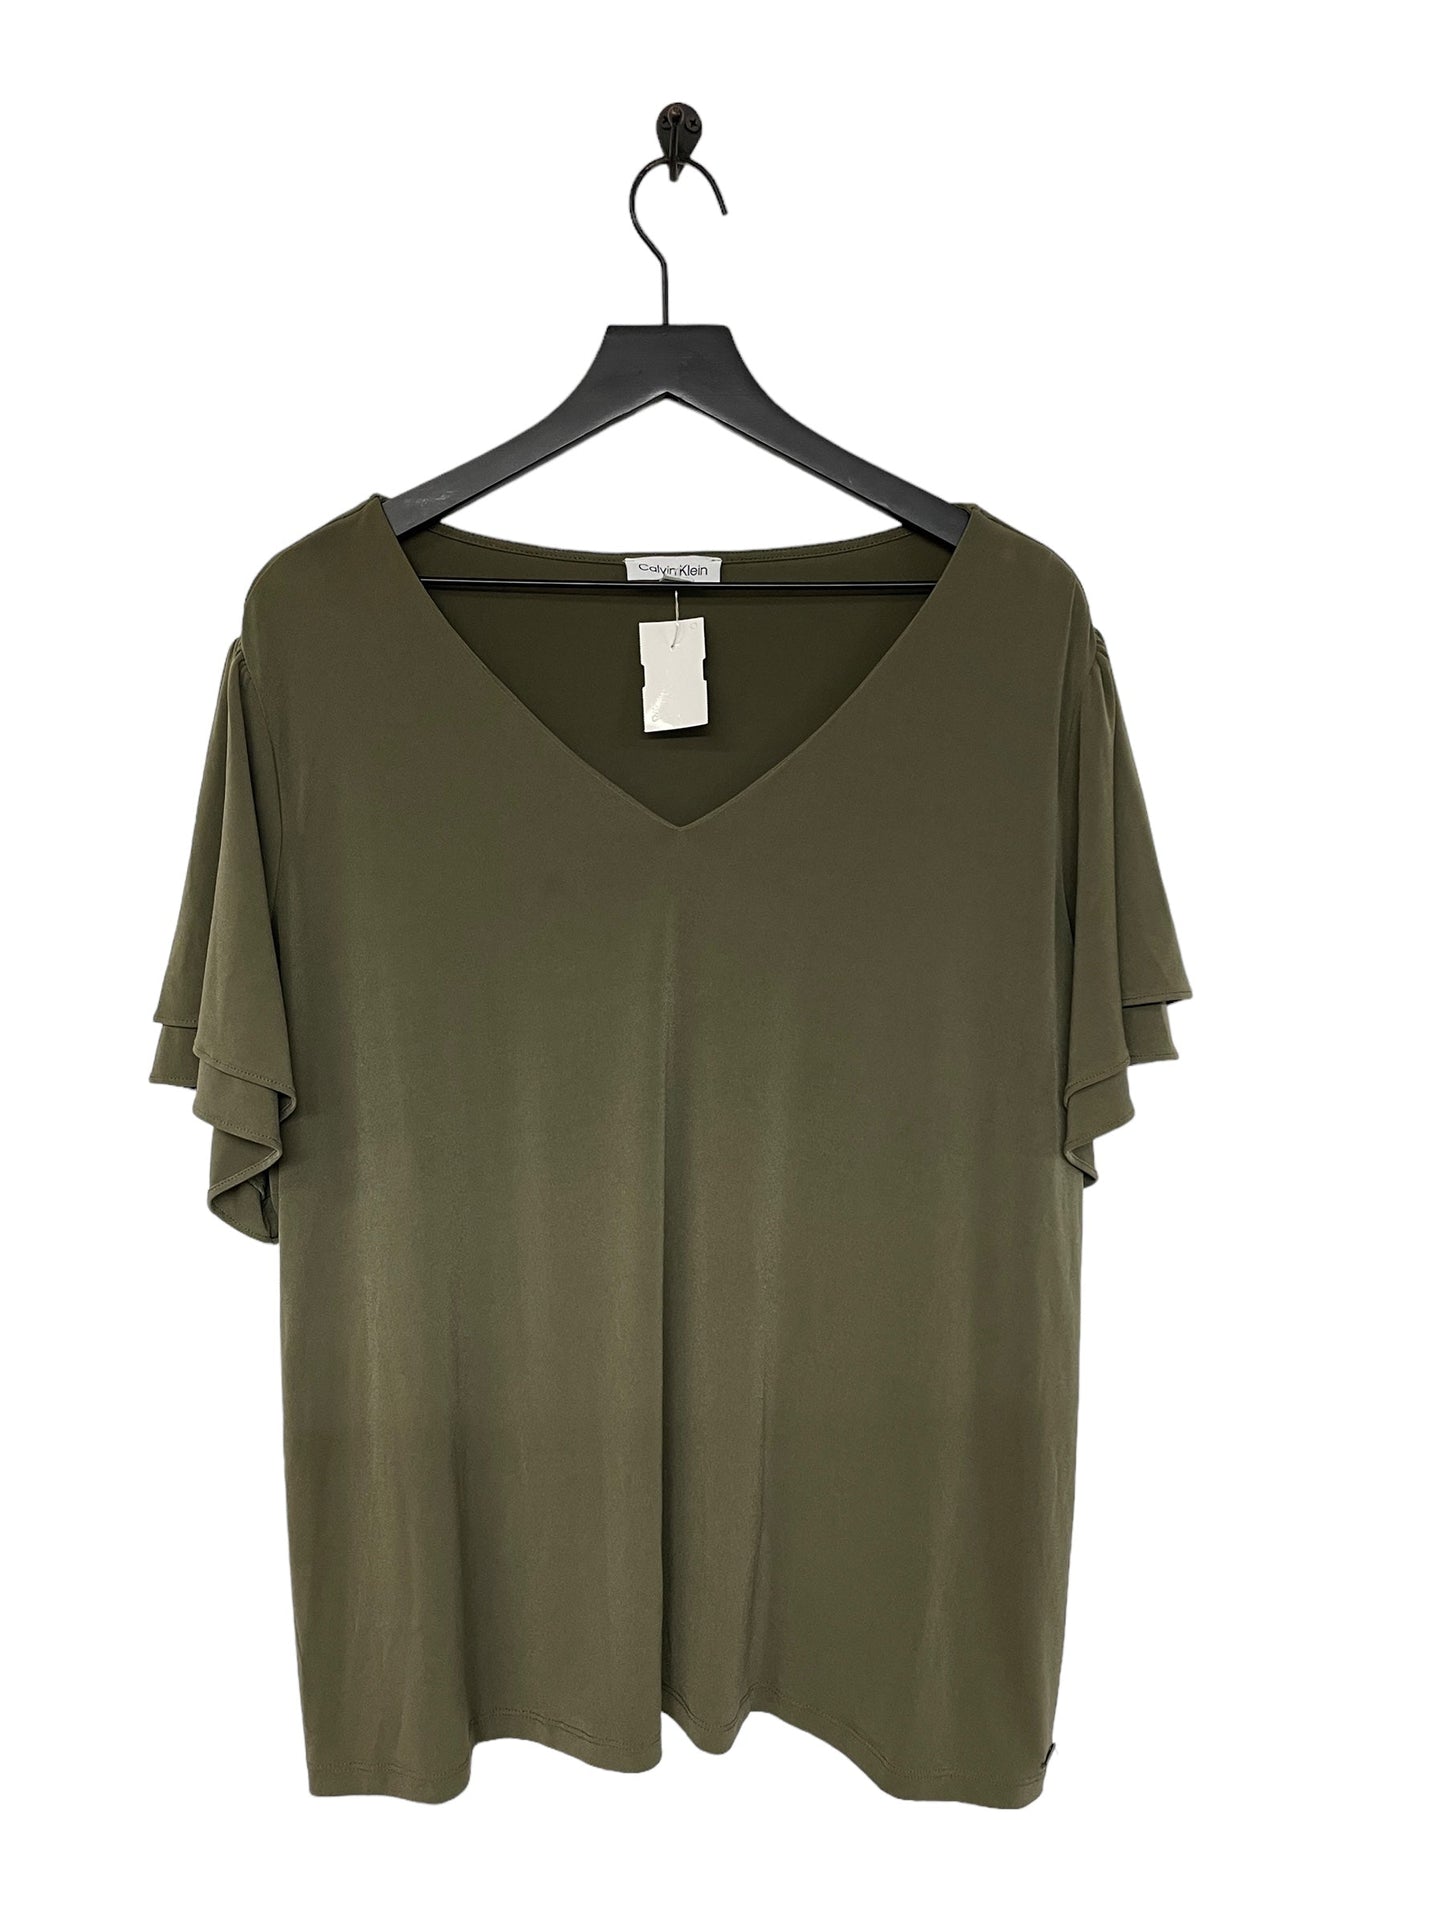 Green Top Short Sleeve Calvin Klein, Size 2x